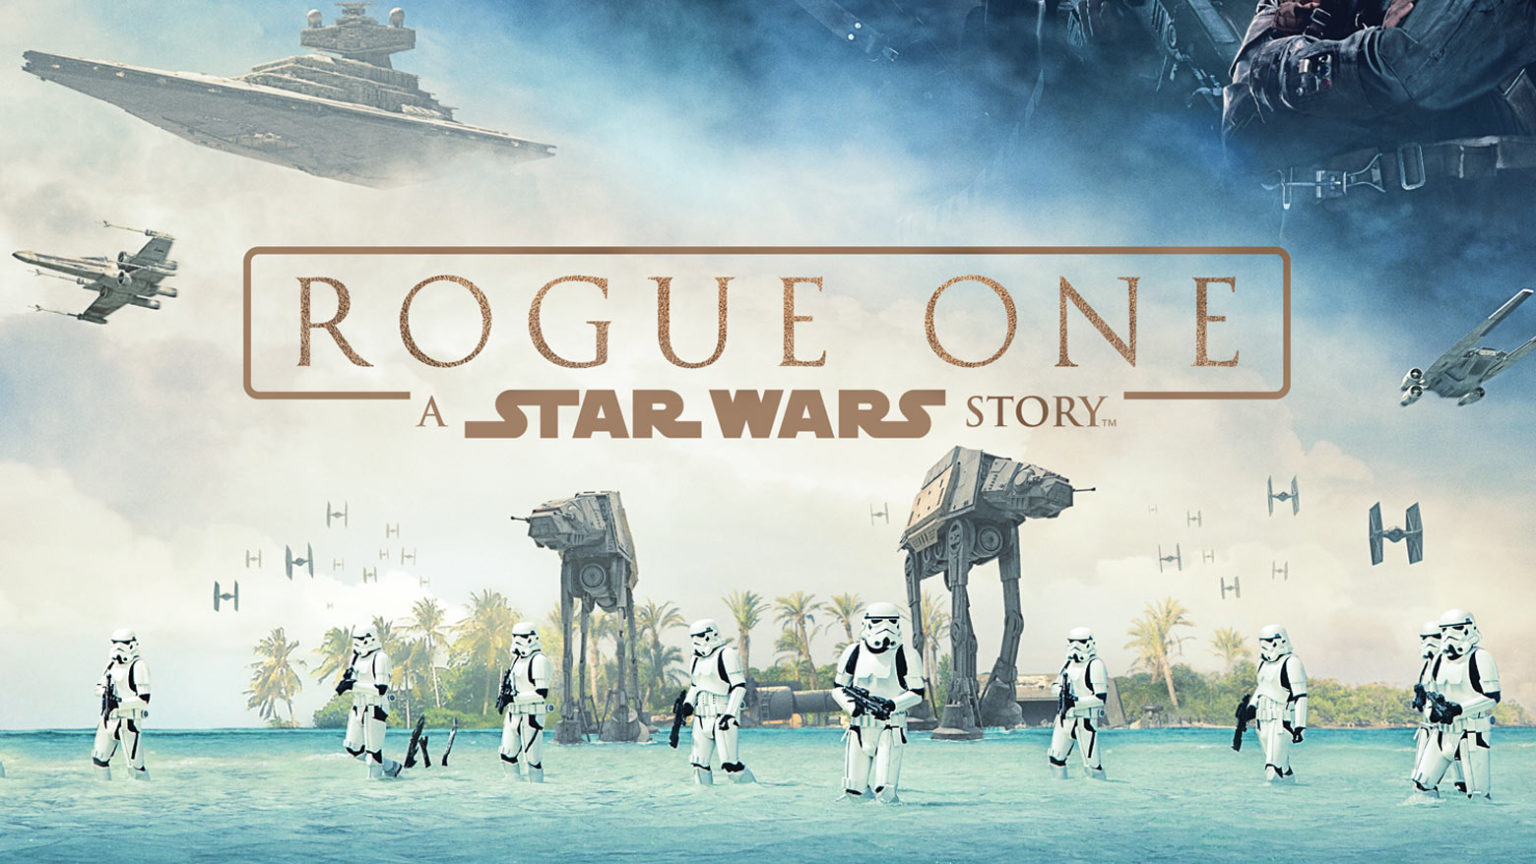 Rogue One, Donald Trump, Star Wars trilogy, evil empire